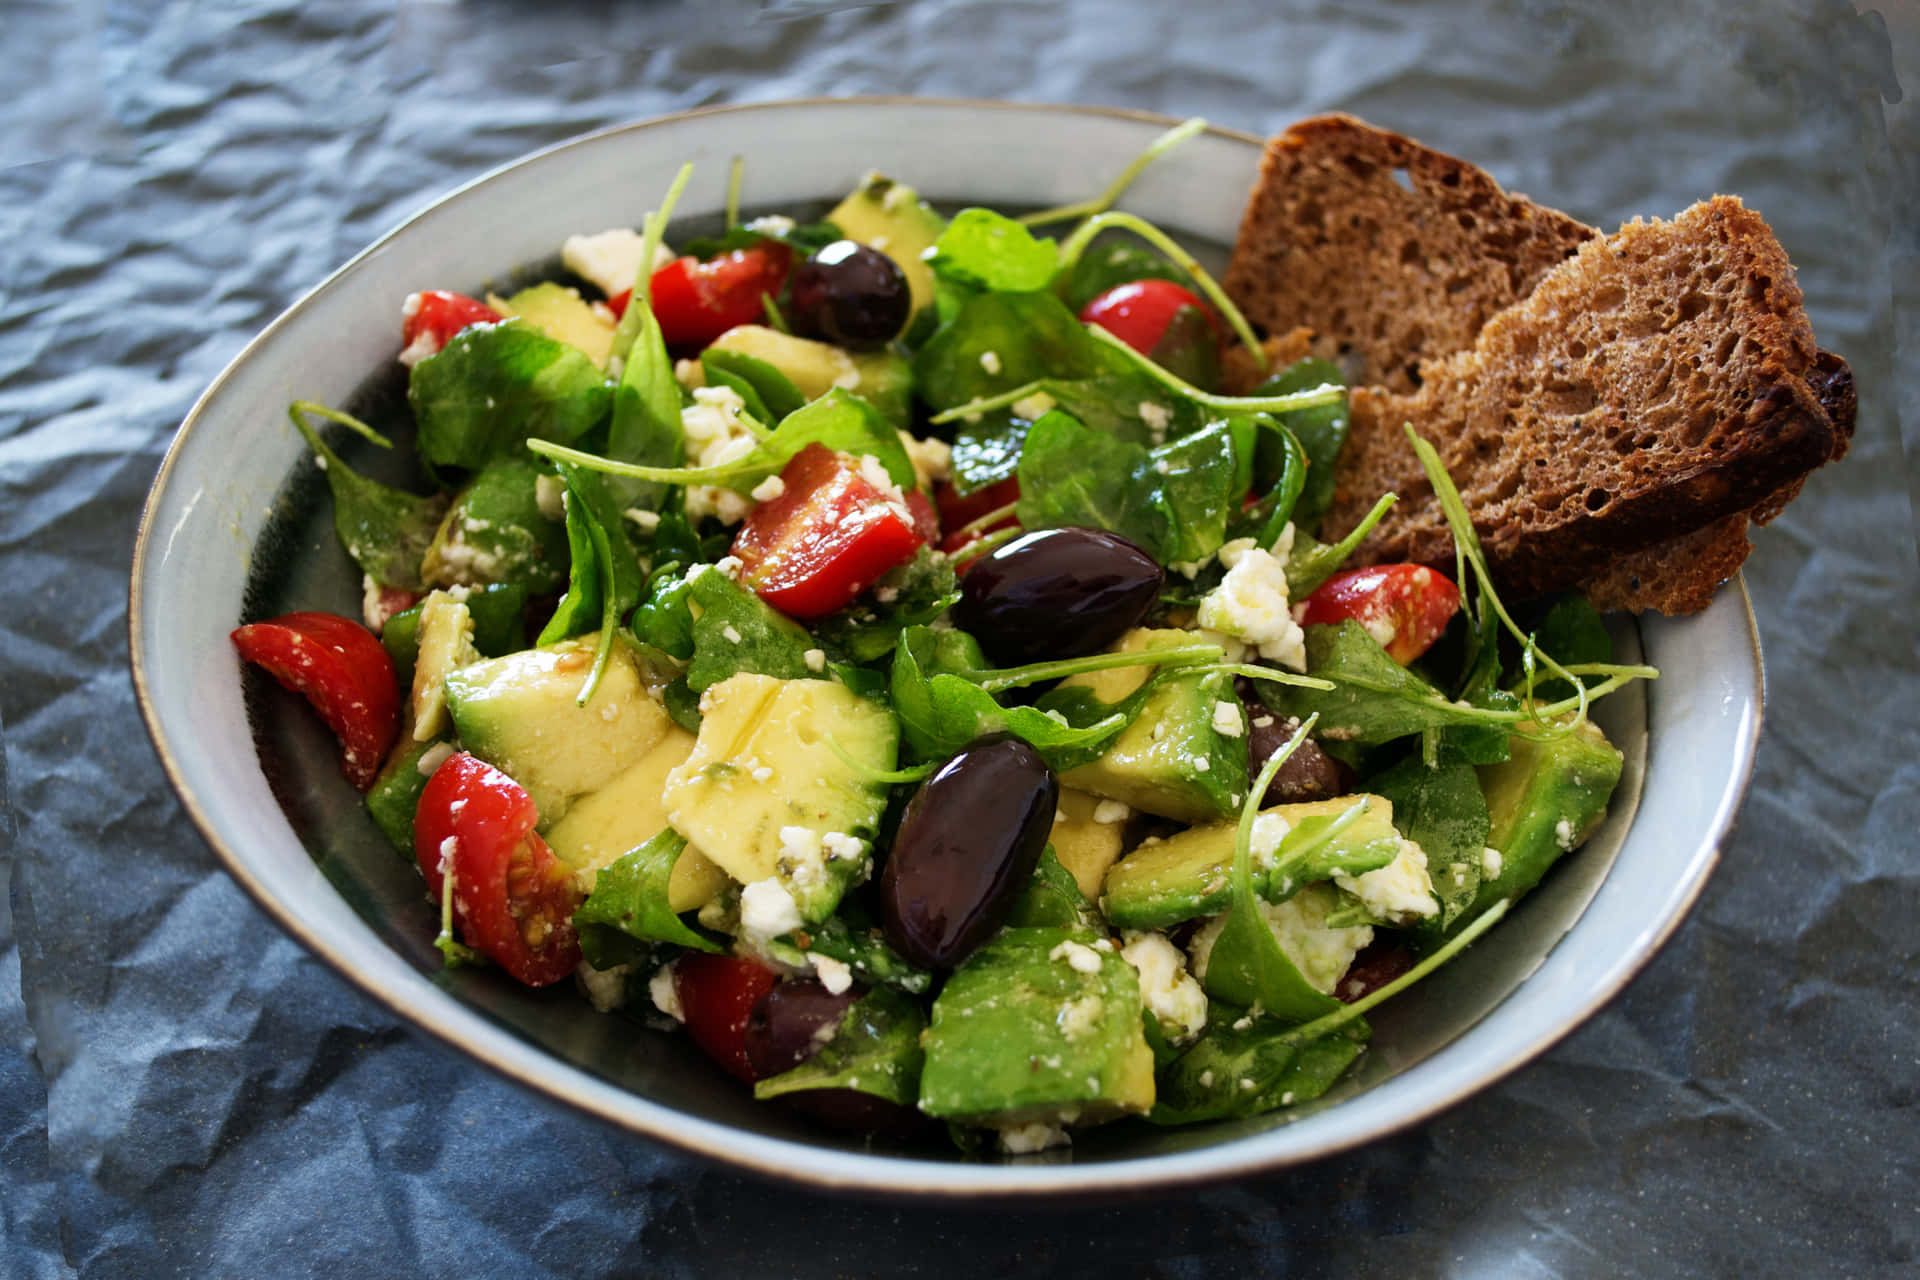 Enjoy a delicious, nutritious salad for dinner